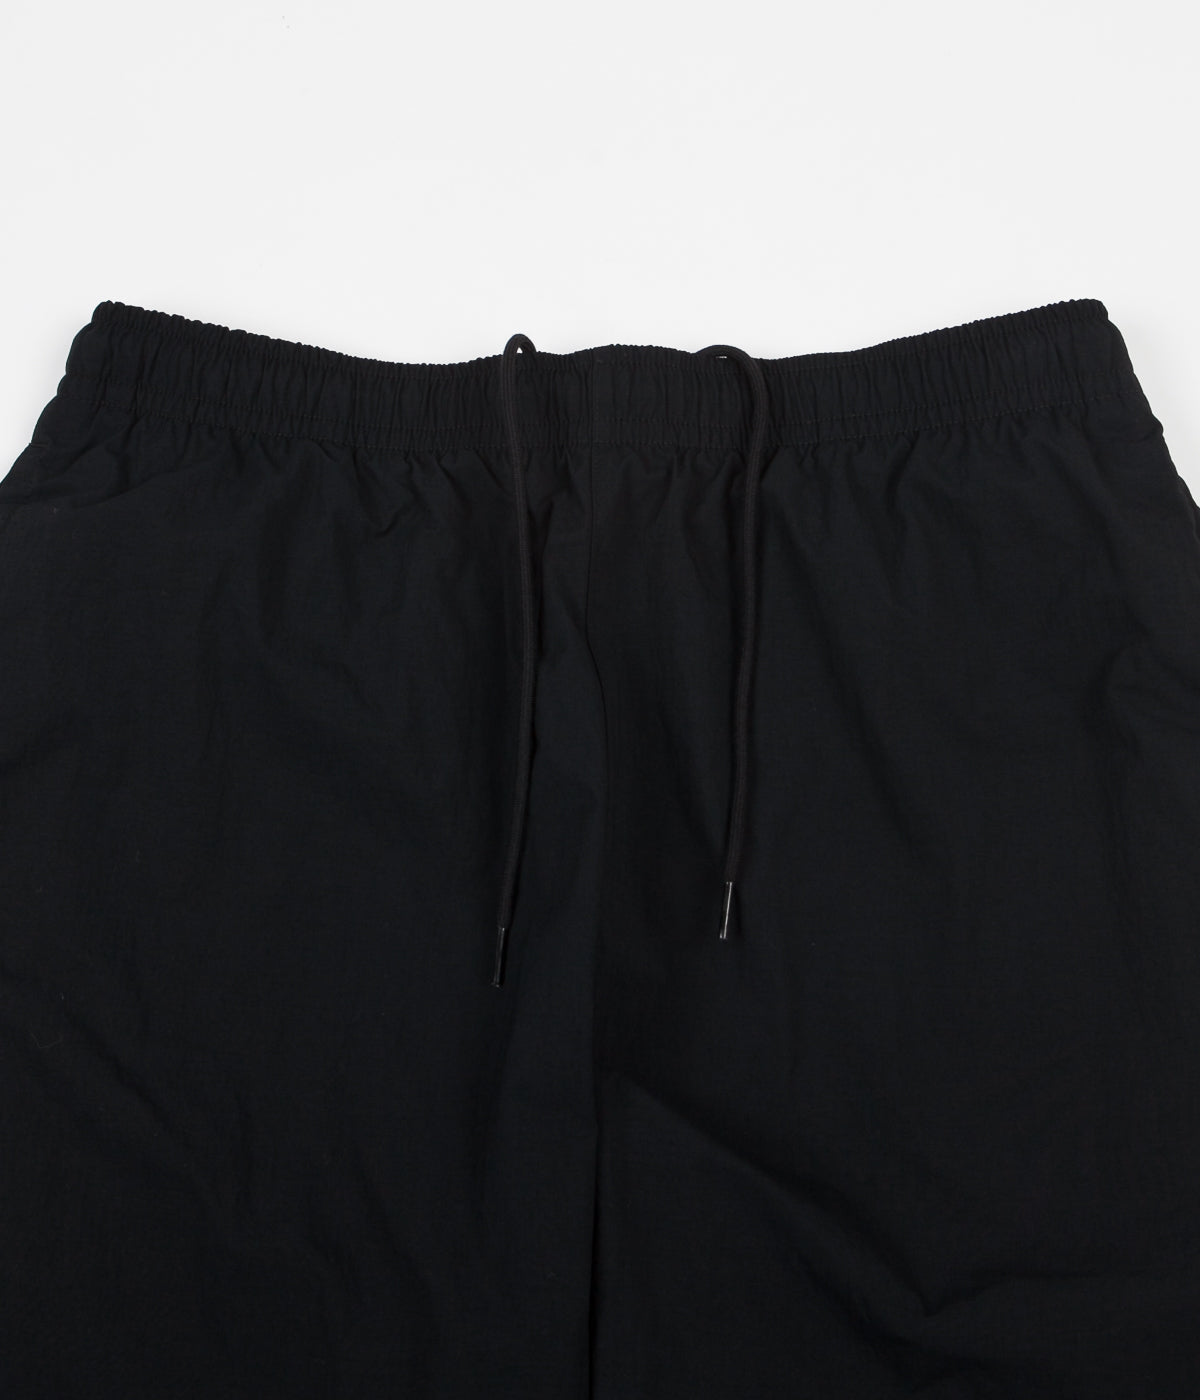 Nike SB Swoosh Track Pants - Black / White / White | Flatspot